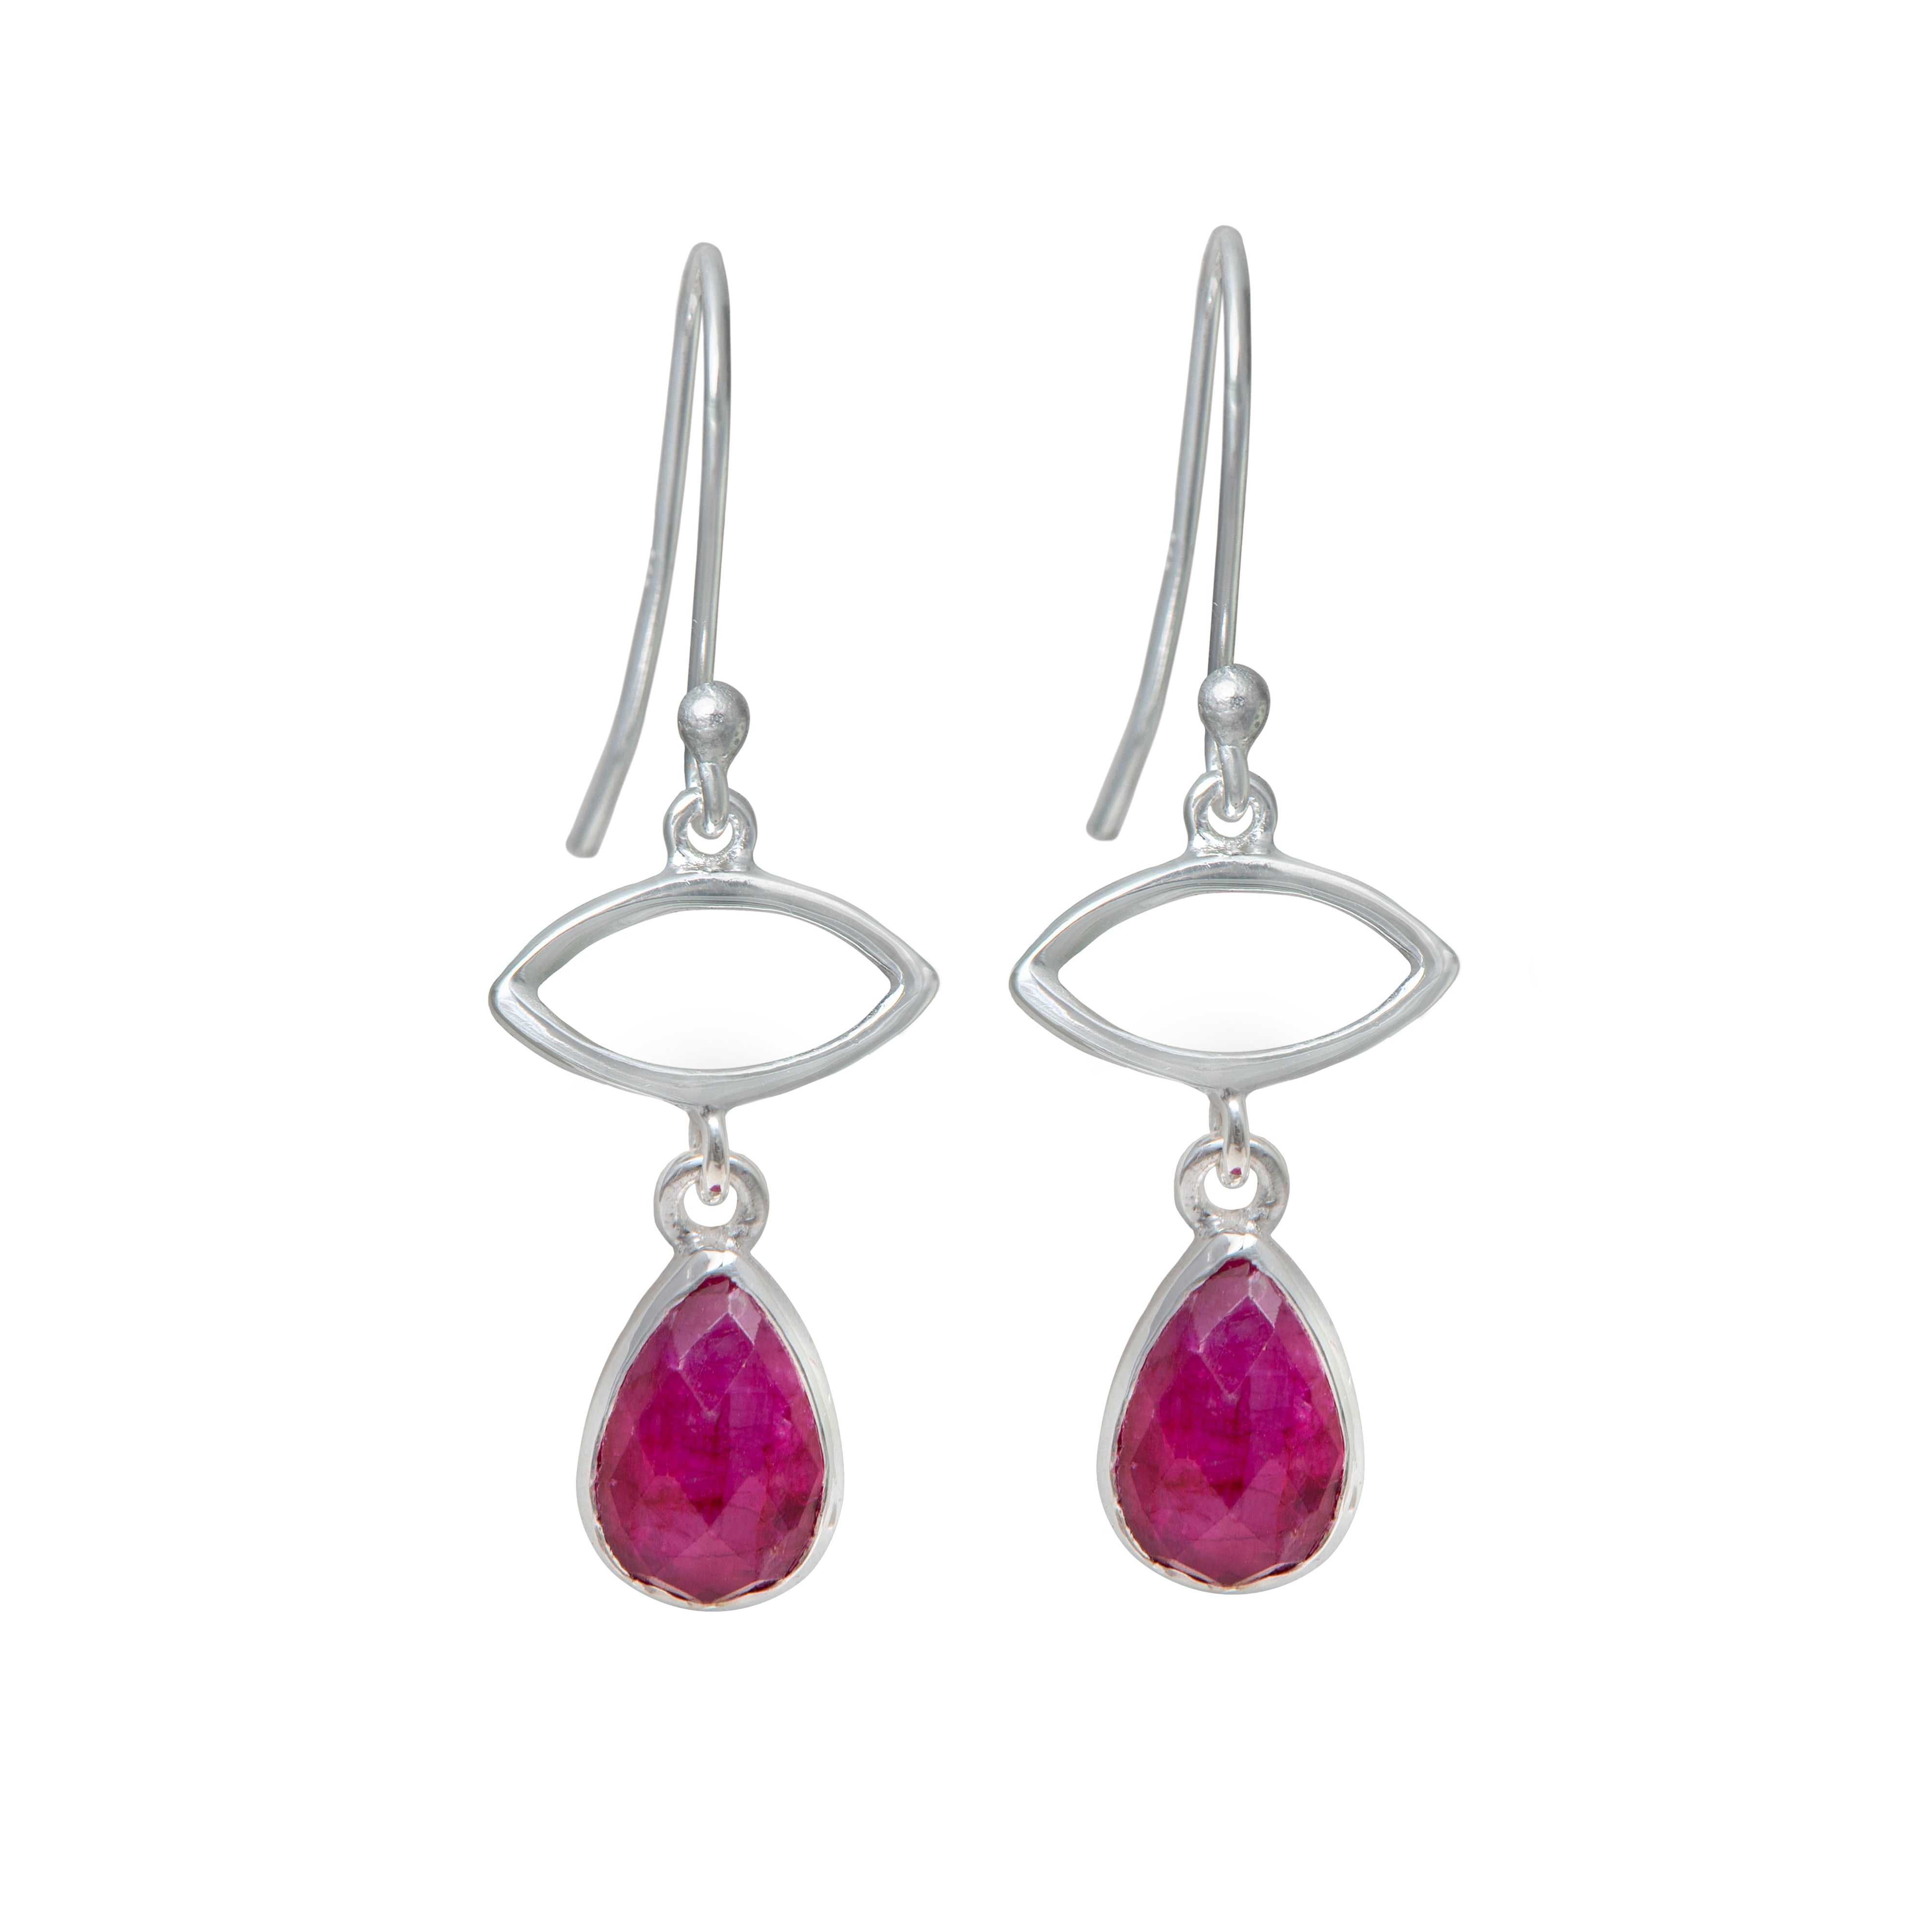 Silver Drop Earrings with Ruby Quartz Gemstone